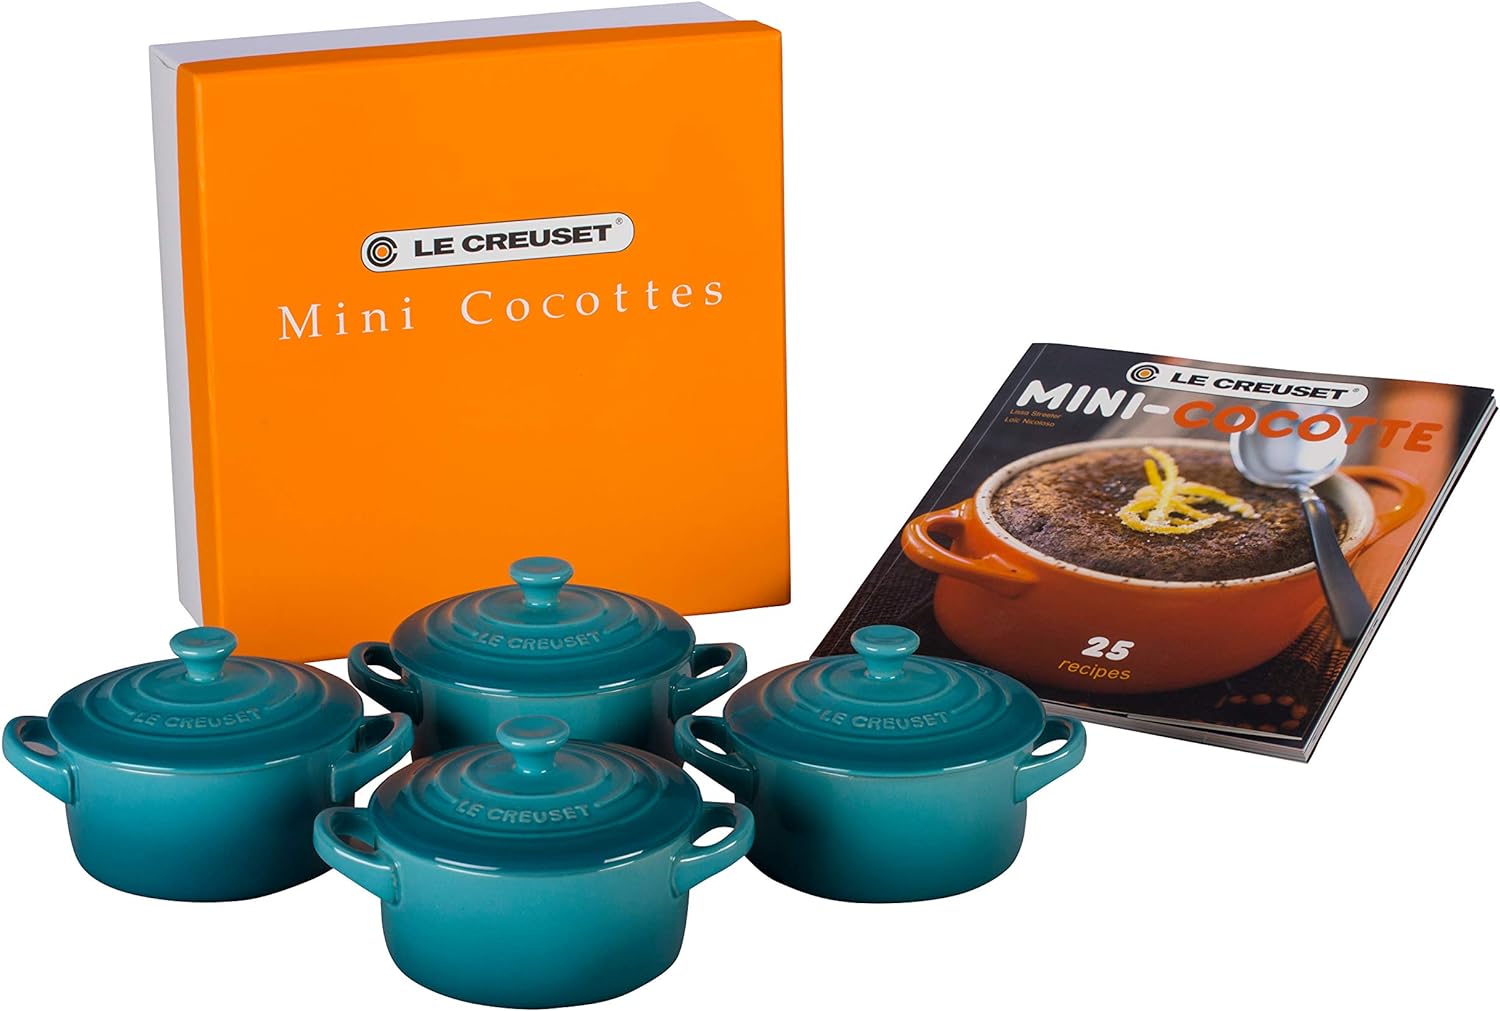 Le Creuset Stoneware Set of 4 Mini Cocottes with Cookbook, 8 oz. each, Marseille